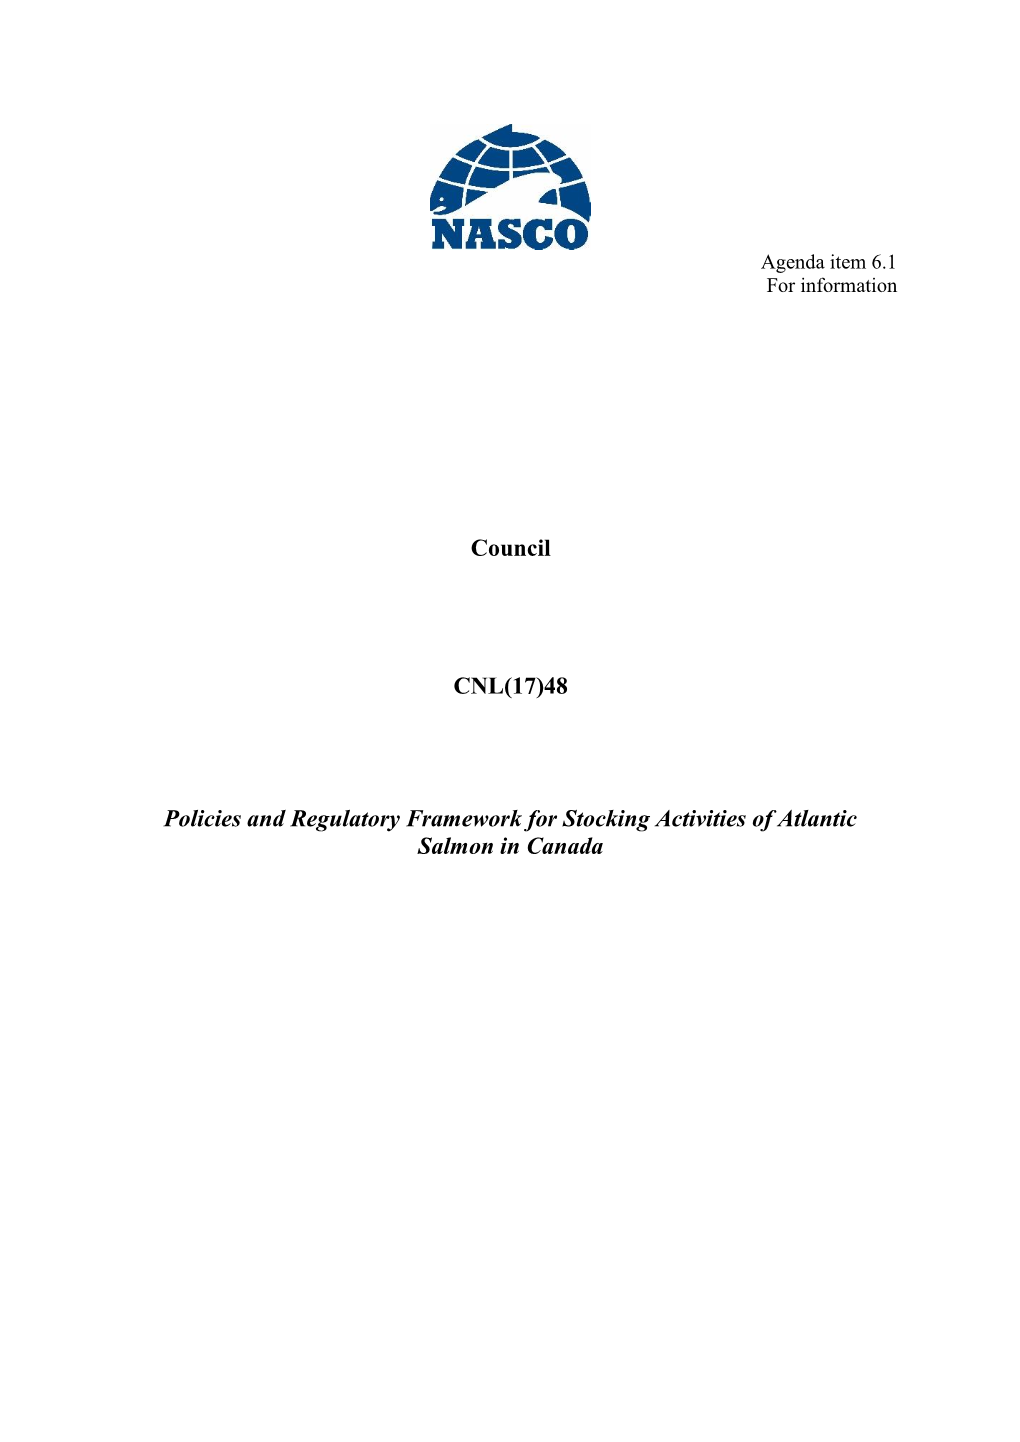 Council CNL(17)48 Policies and Regulatory Framework for Stocking